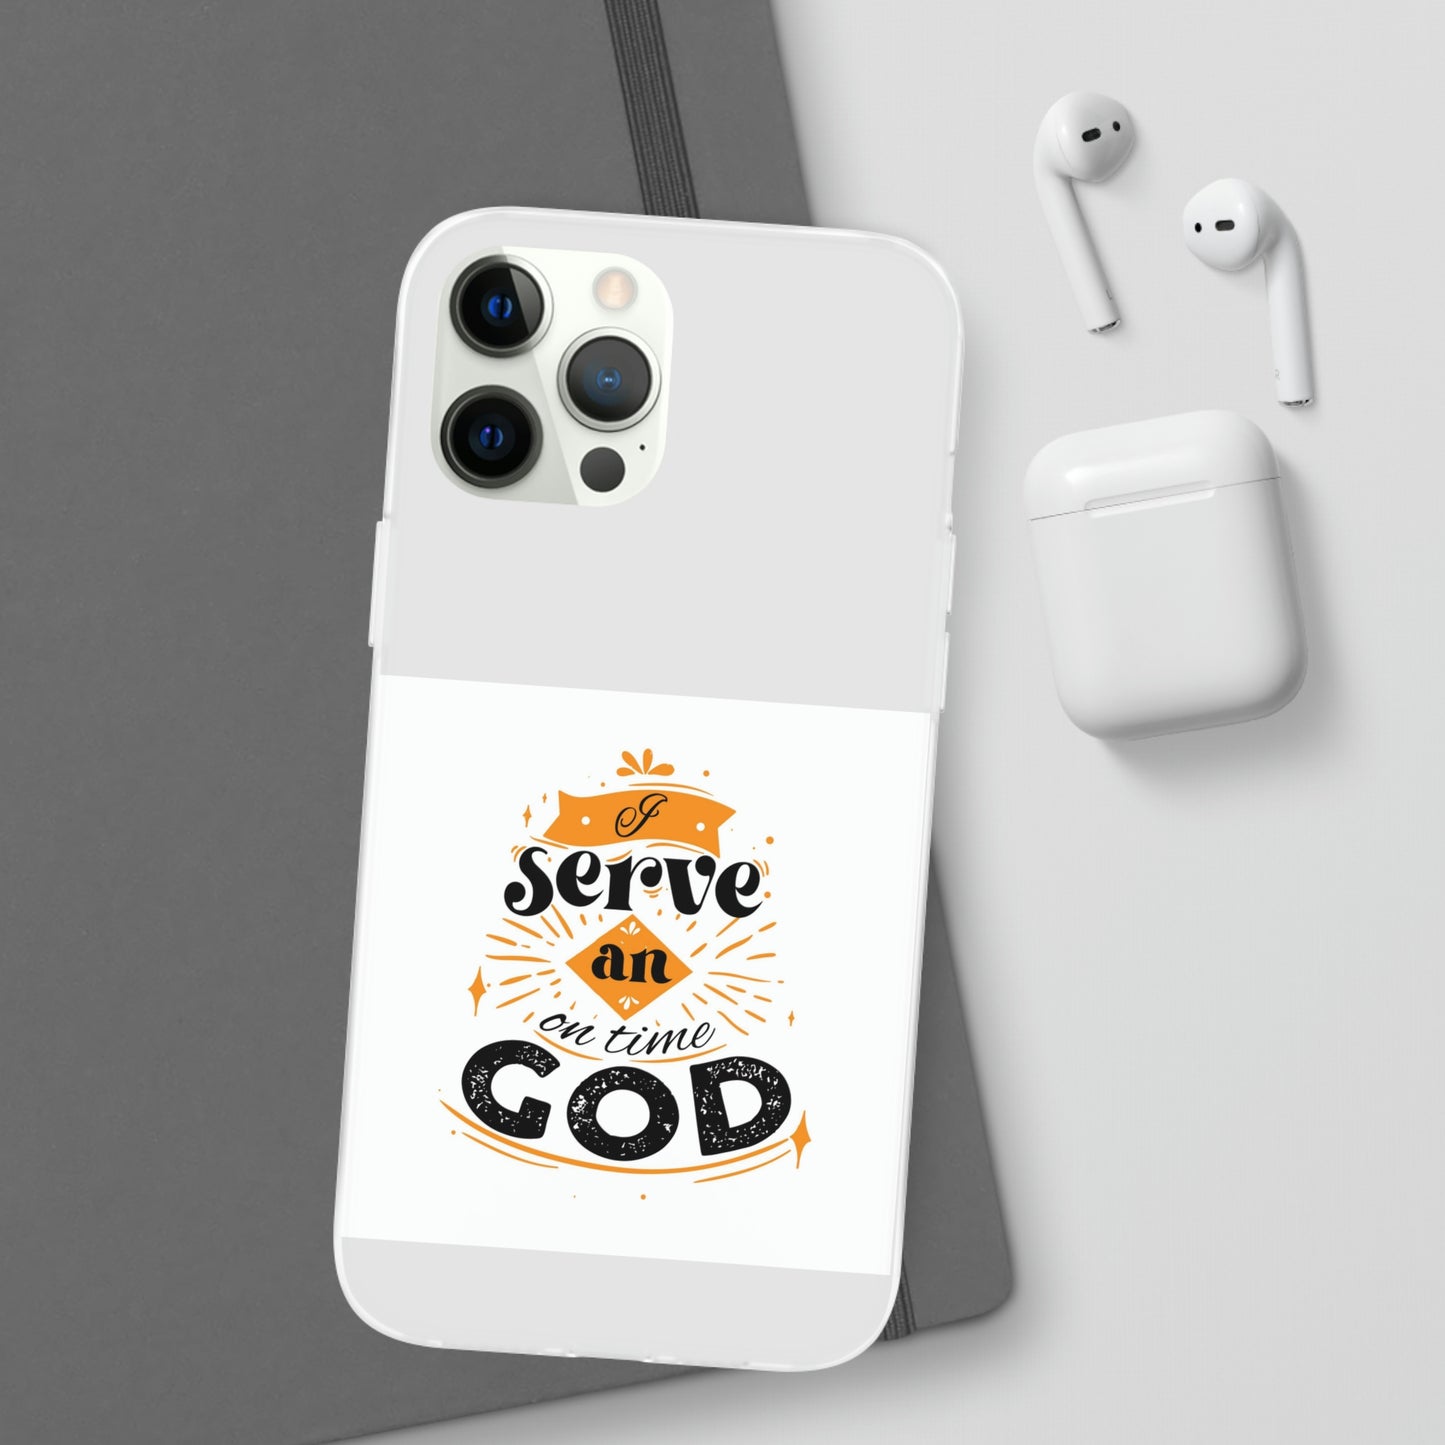 I Serve An On Time God Flexi Phone Case